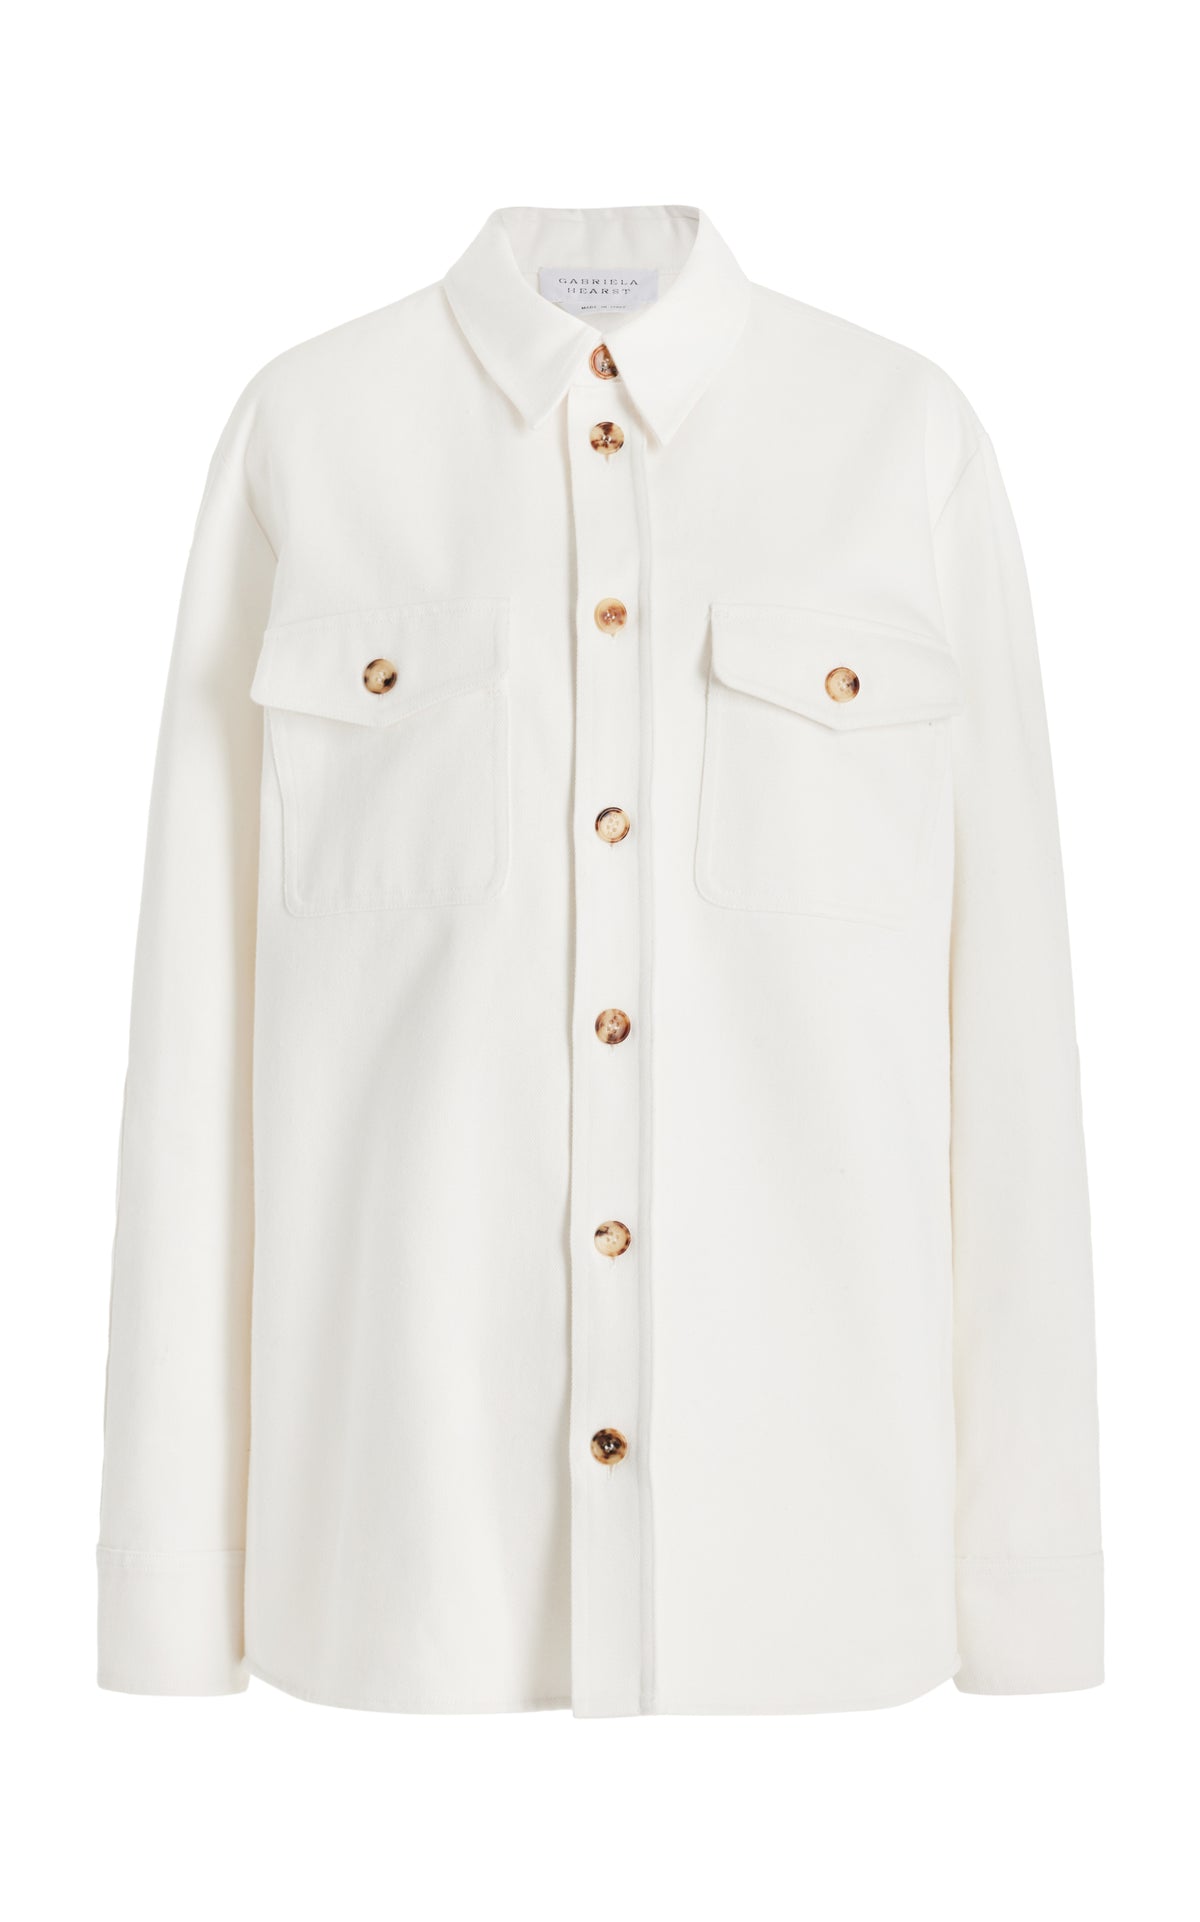 Everly Overshirt in White Organic Cotton